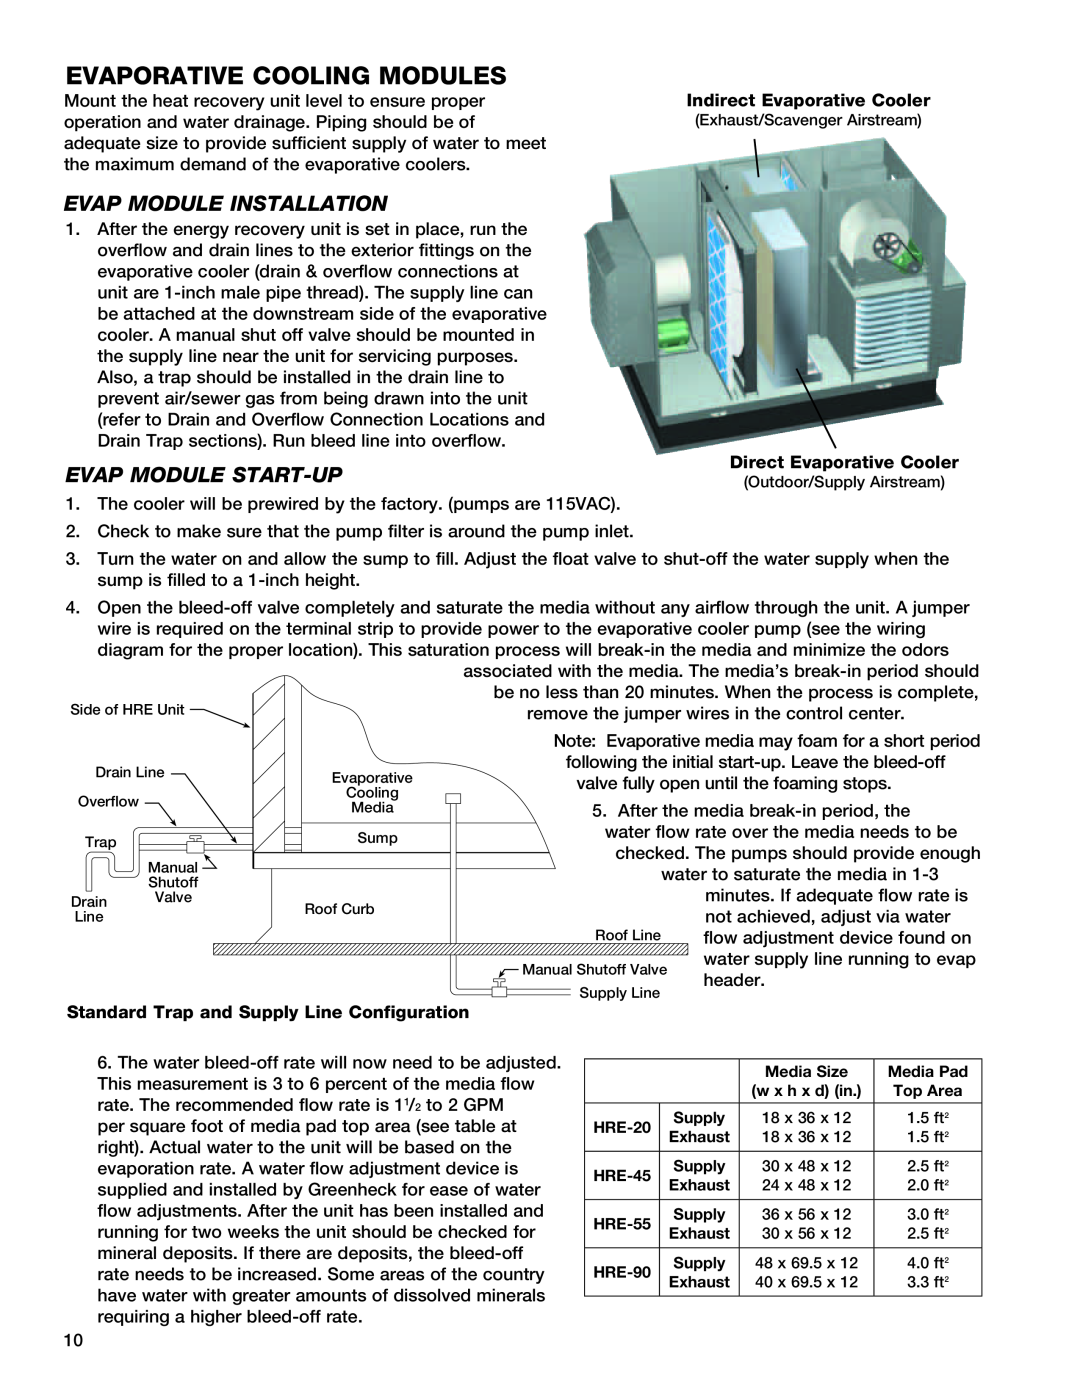 Greenheck Fan 55 Evaporative Cooling Modules, Evap Module Installation, Evap Module Start-Up, Indirect Evaporative Cooler 